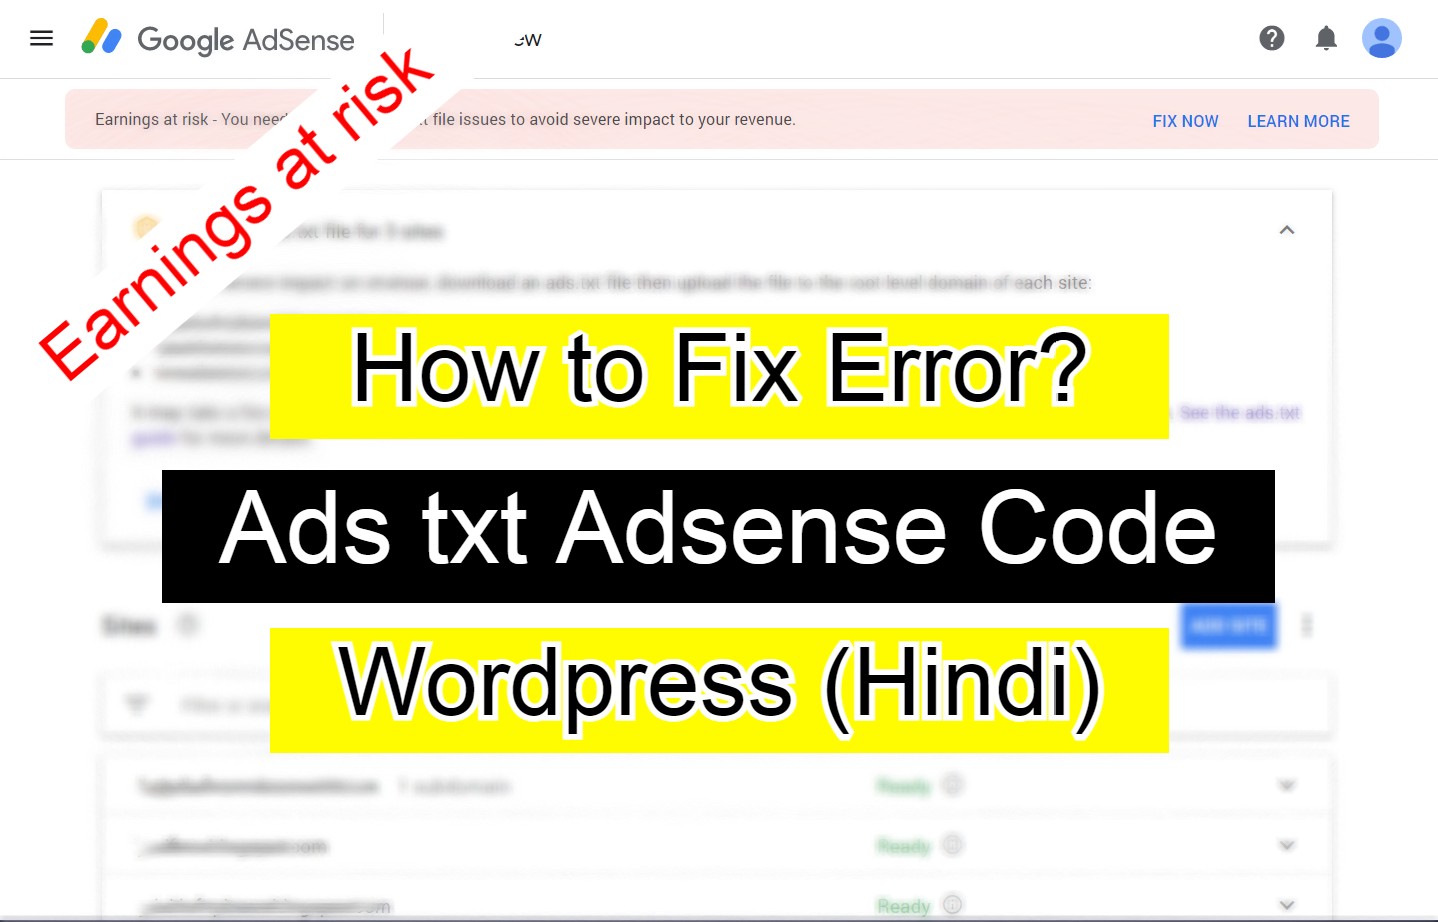 Best Way to Remove Ads txt Adsense Code on WordPress